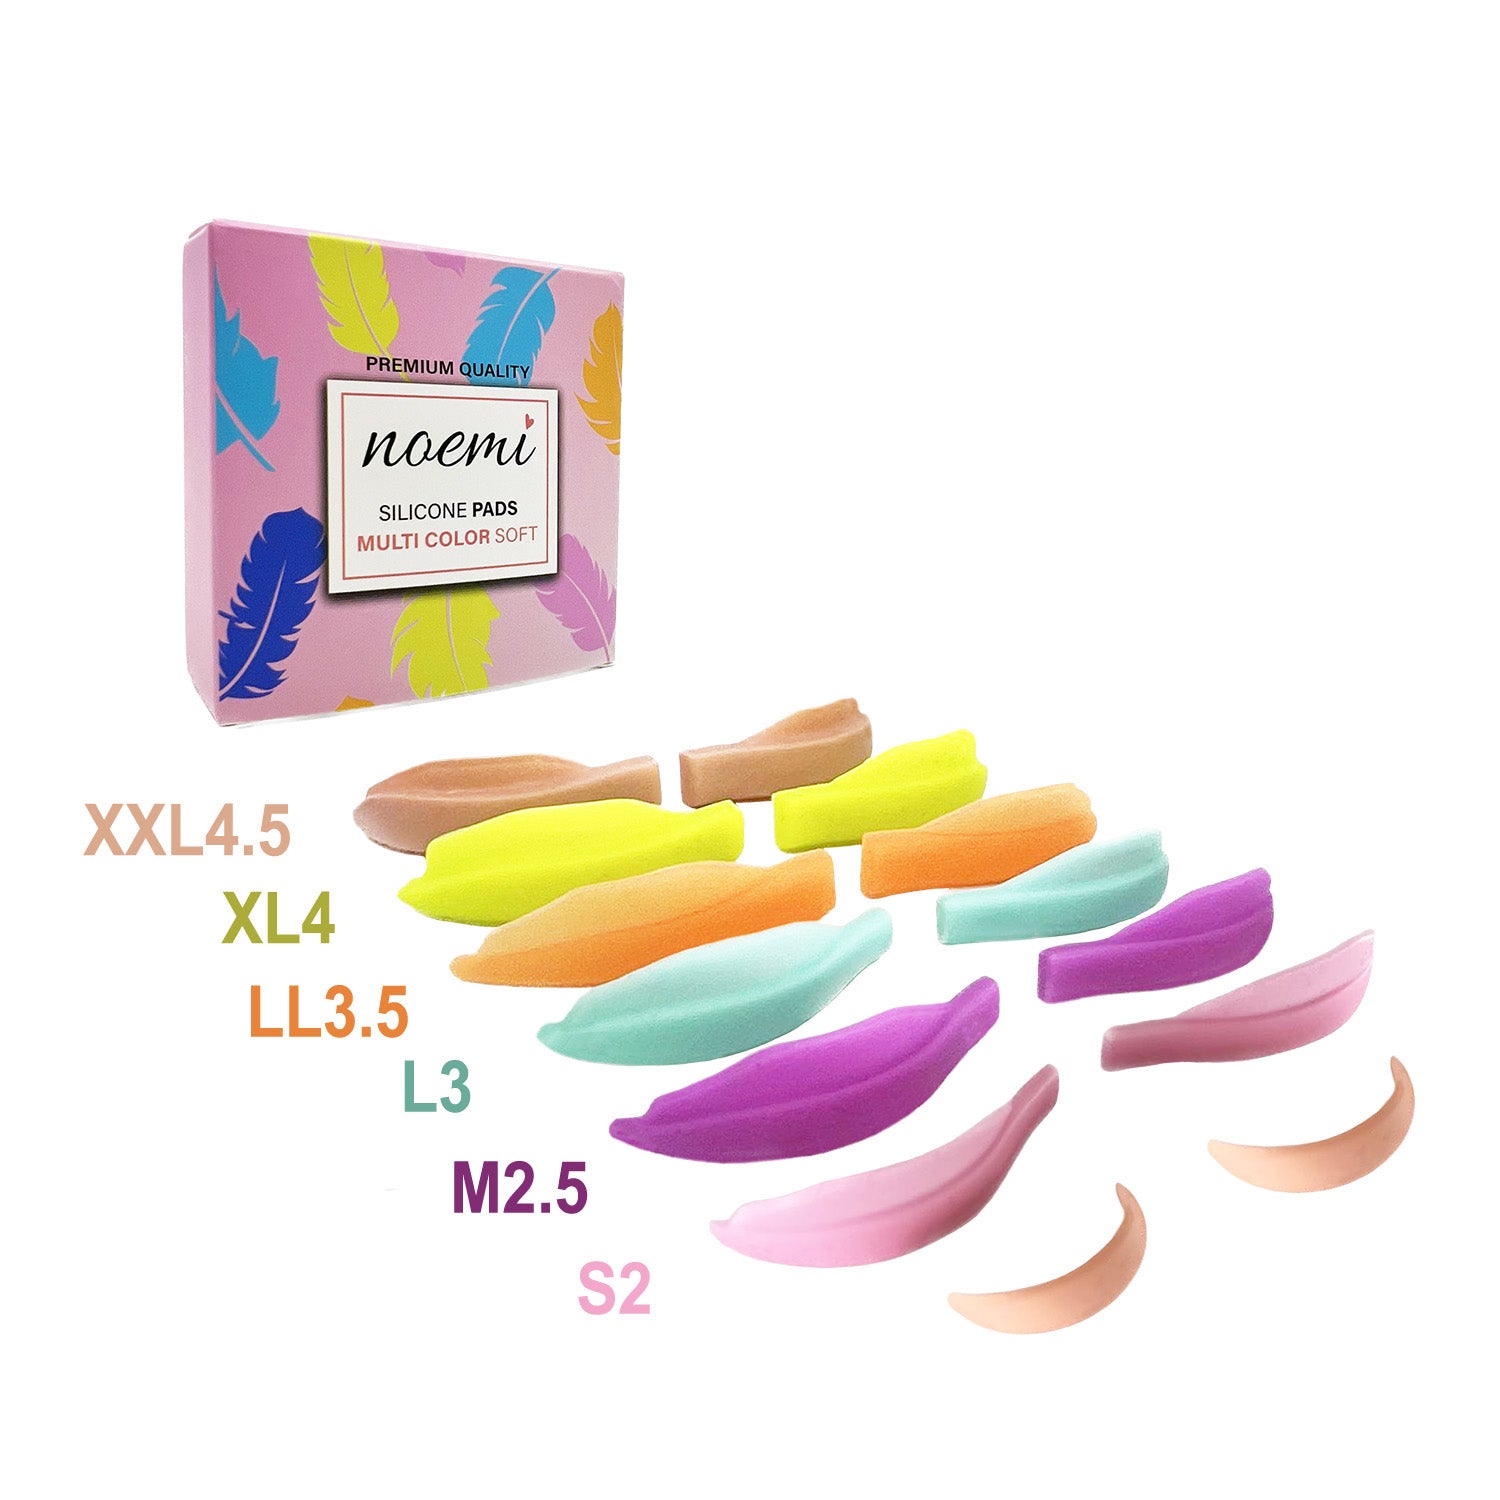 Noemi - Multi Color Soft silicone pads